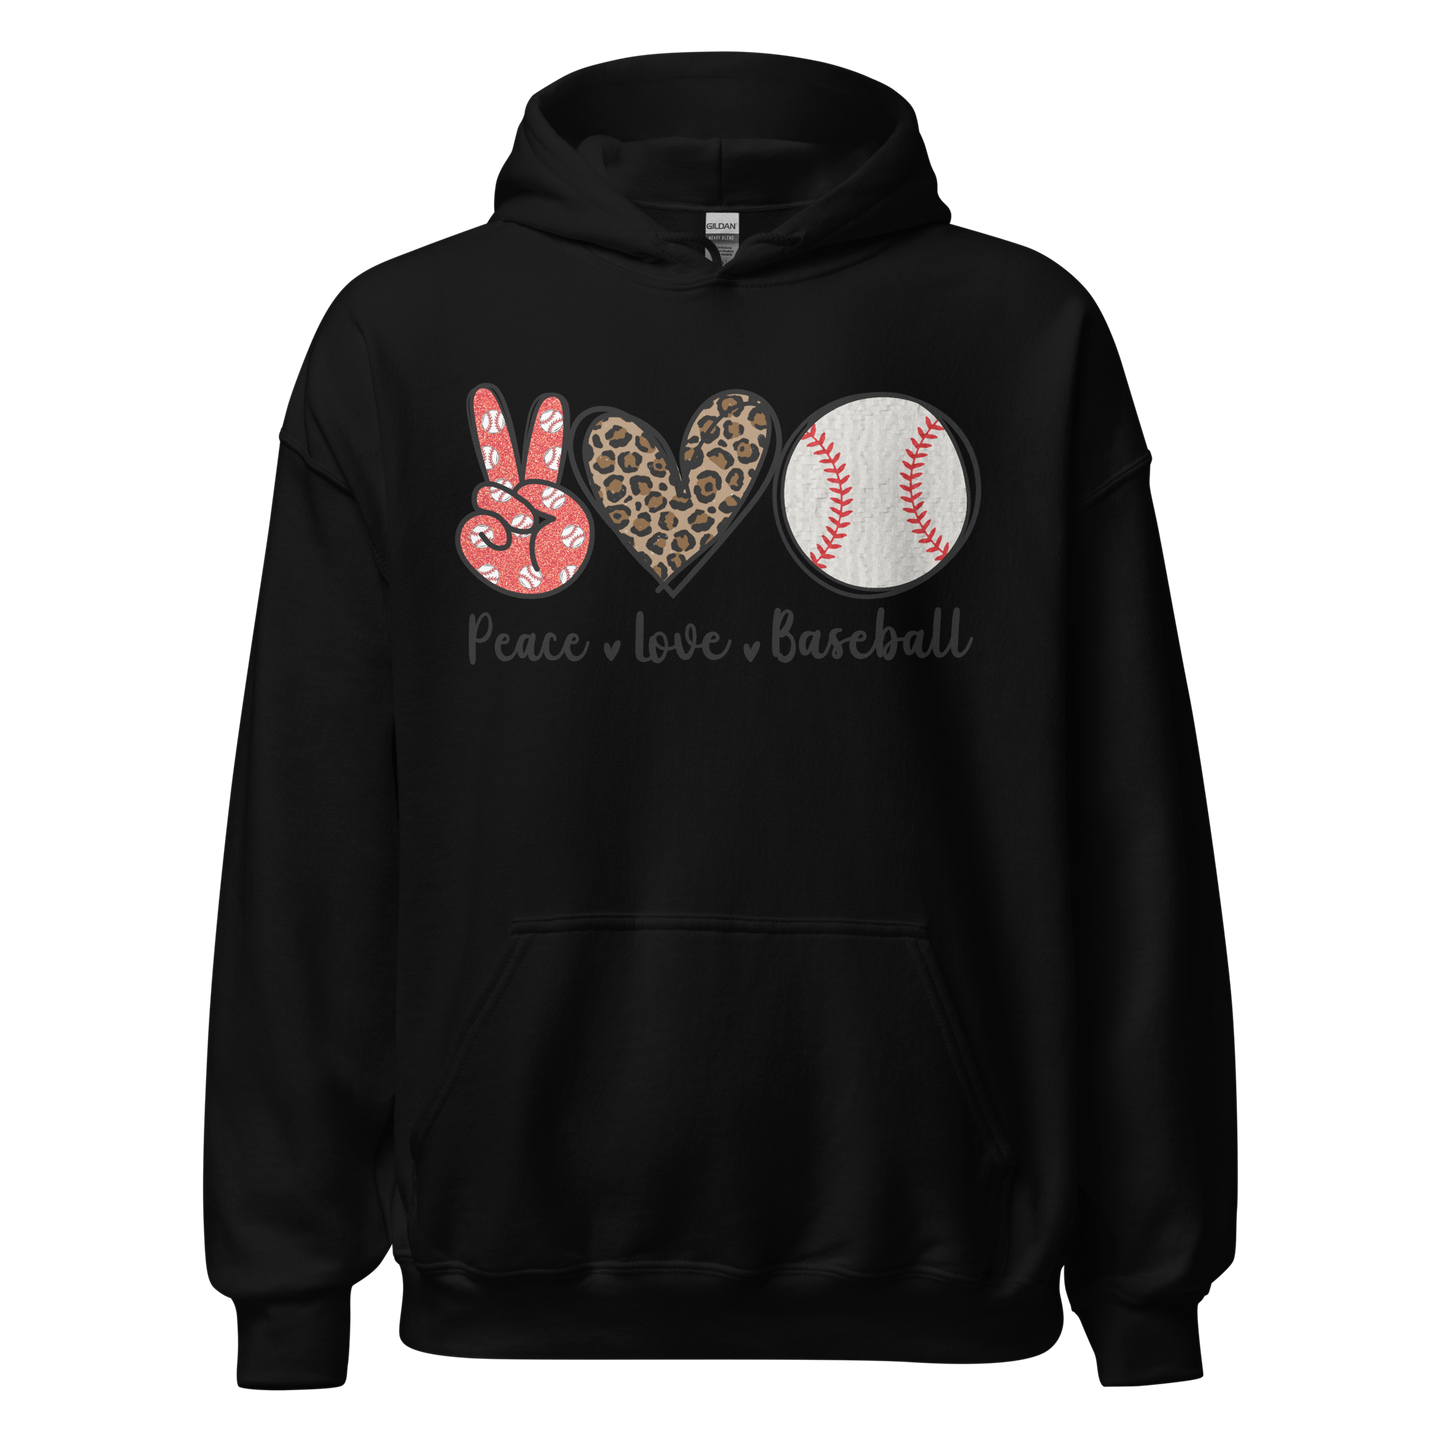 "Peace, Love, Baseball" Hoodie